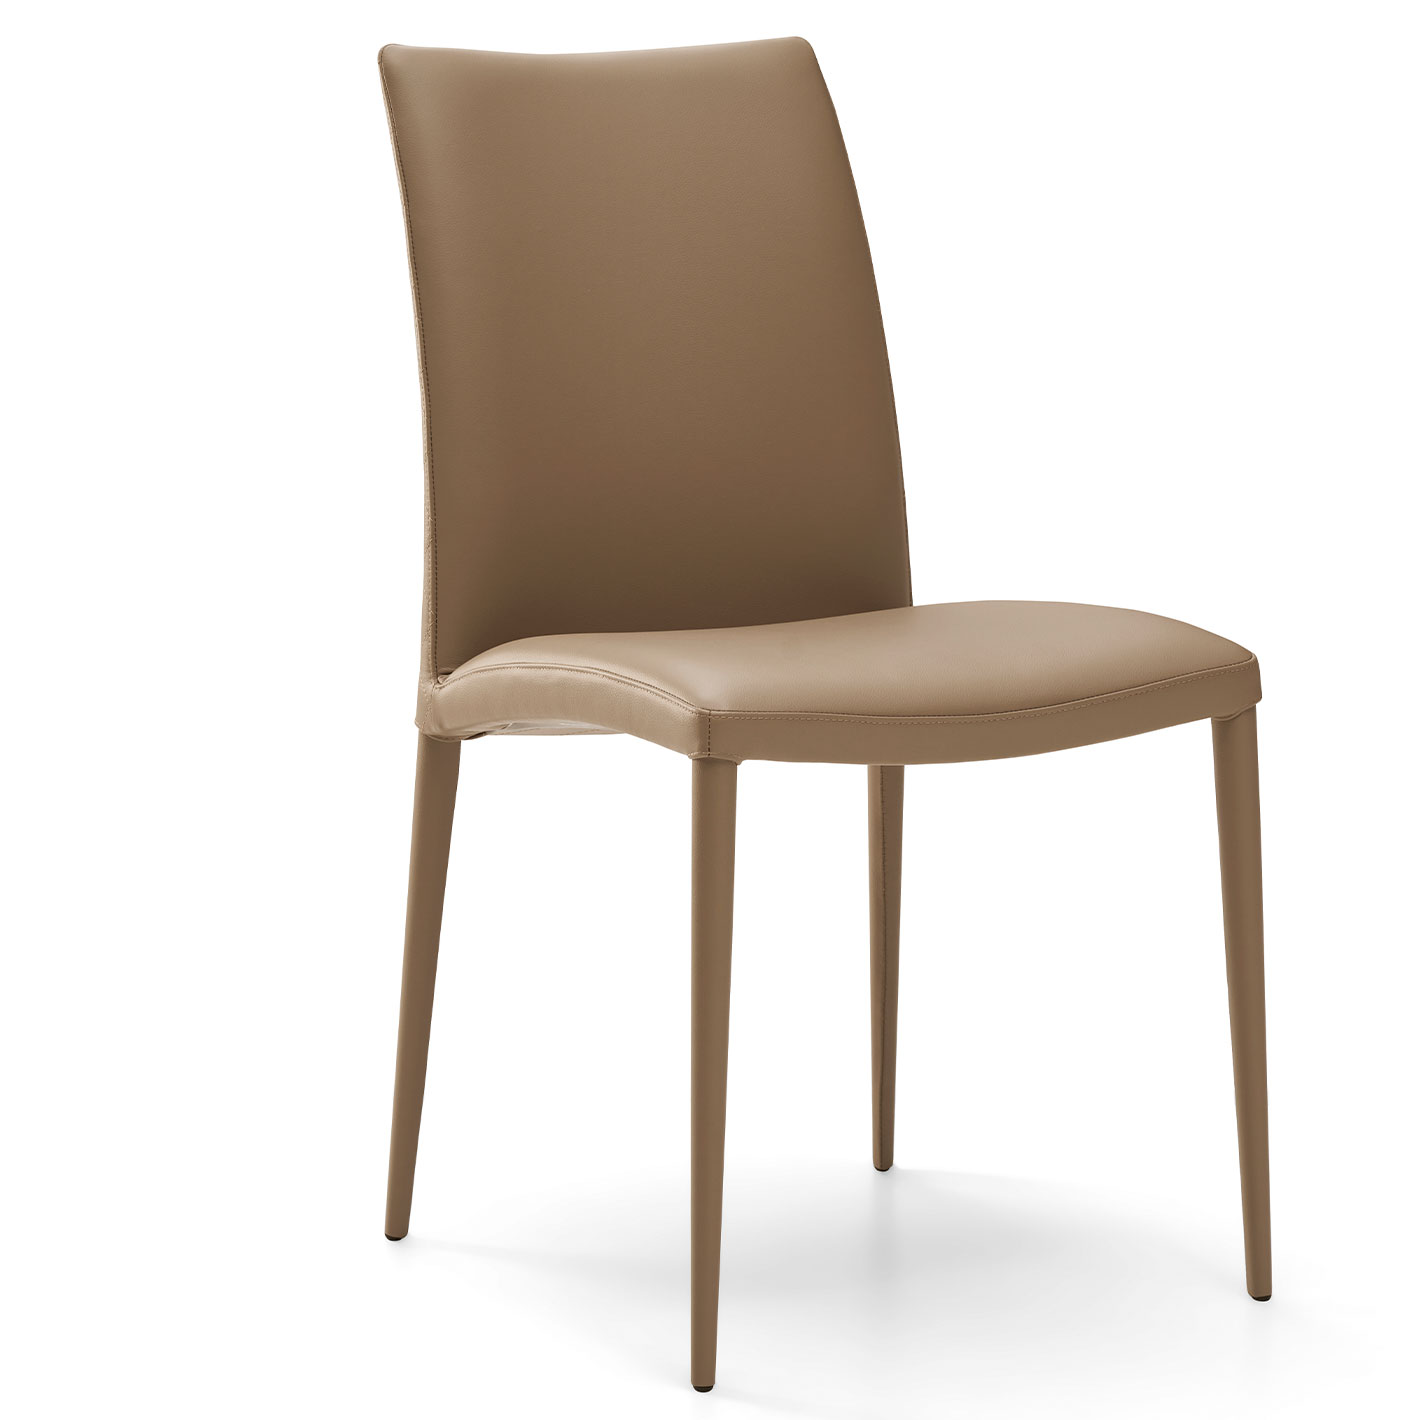 Stühle unter 500 Euro - ASIA Stuhl